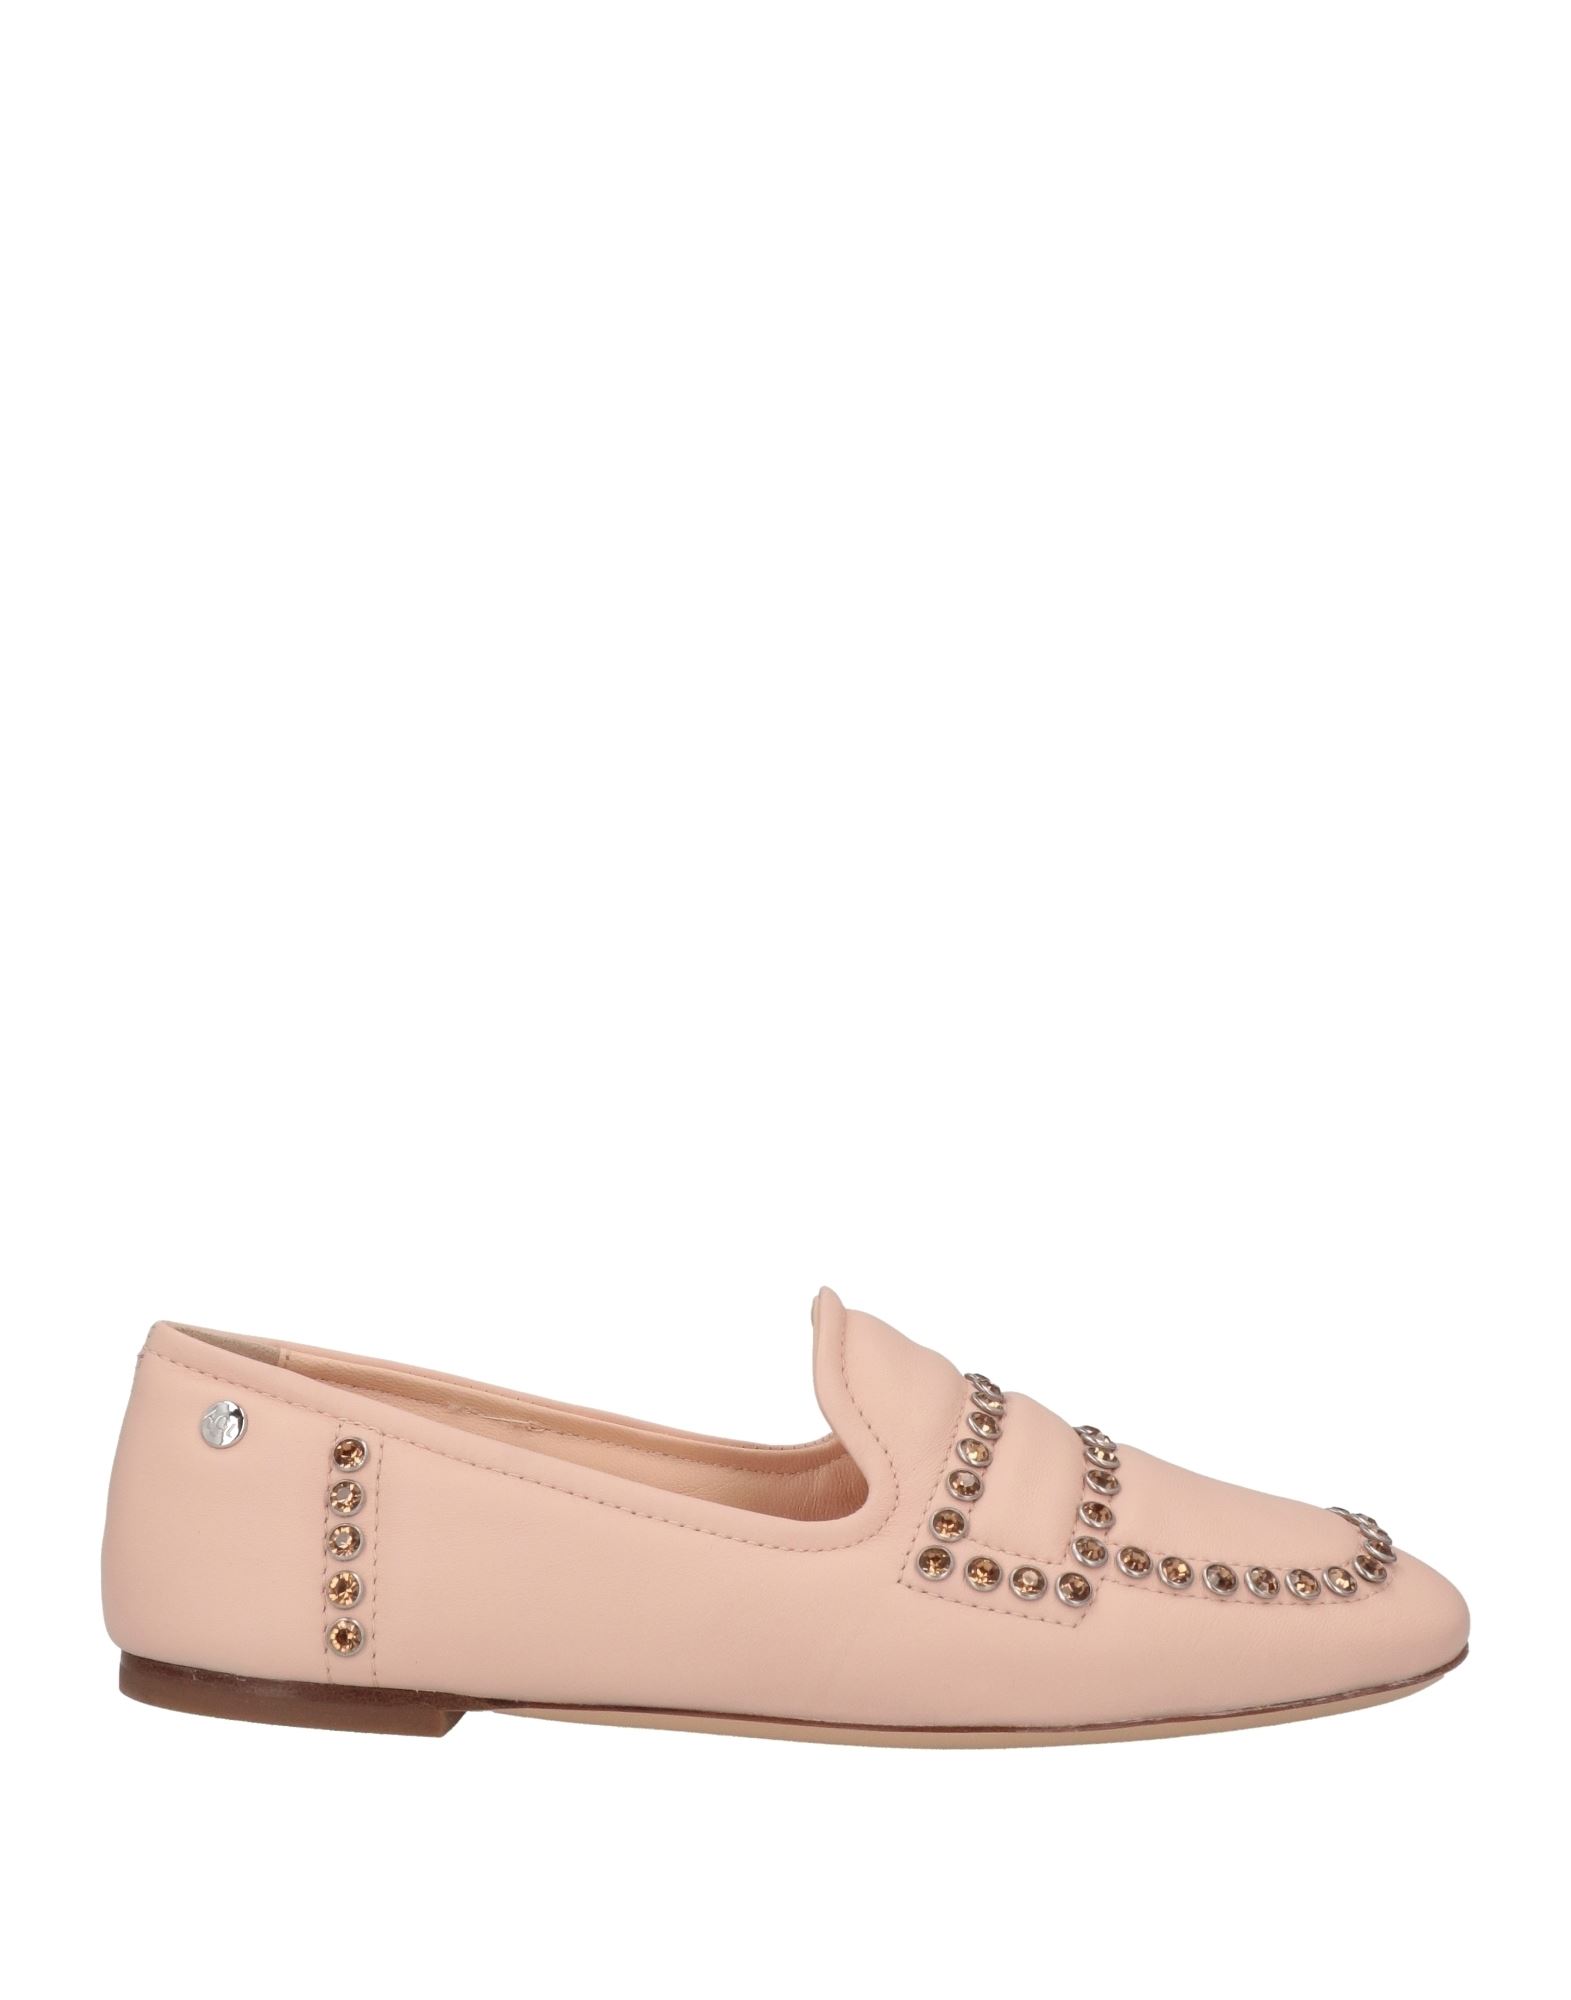 Shop Agl Attilio Giusti Leombruni Agl Woman Loafers Blush Size 7 Soft Leather In Pink